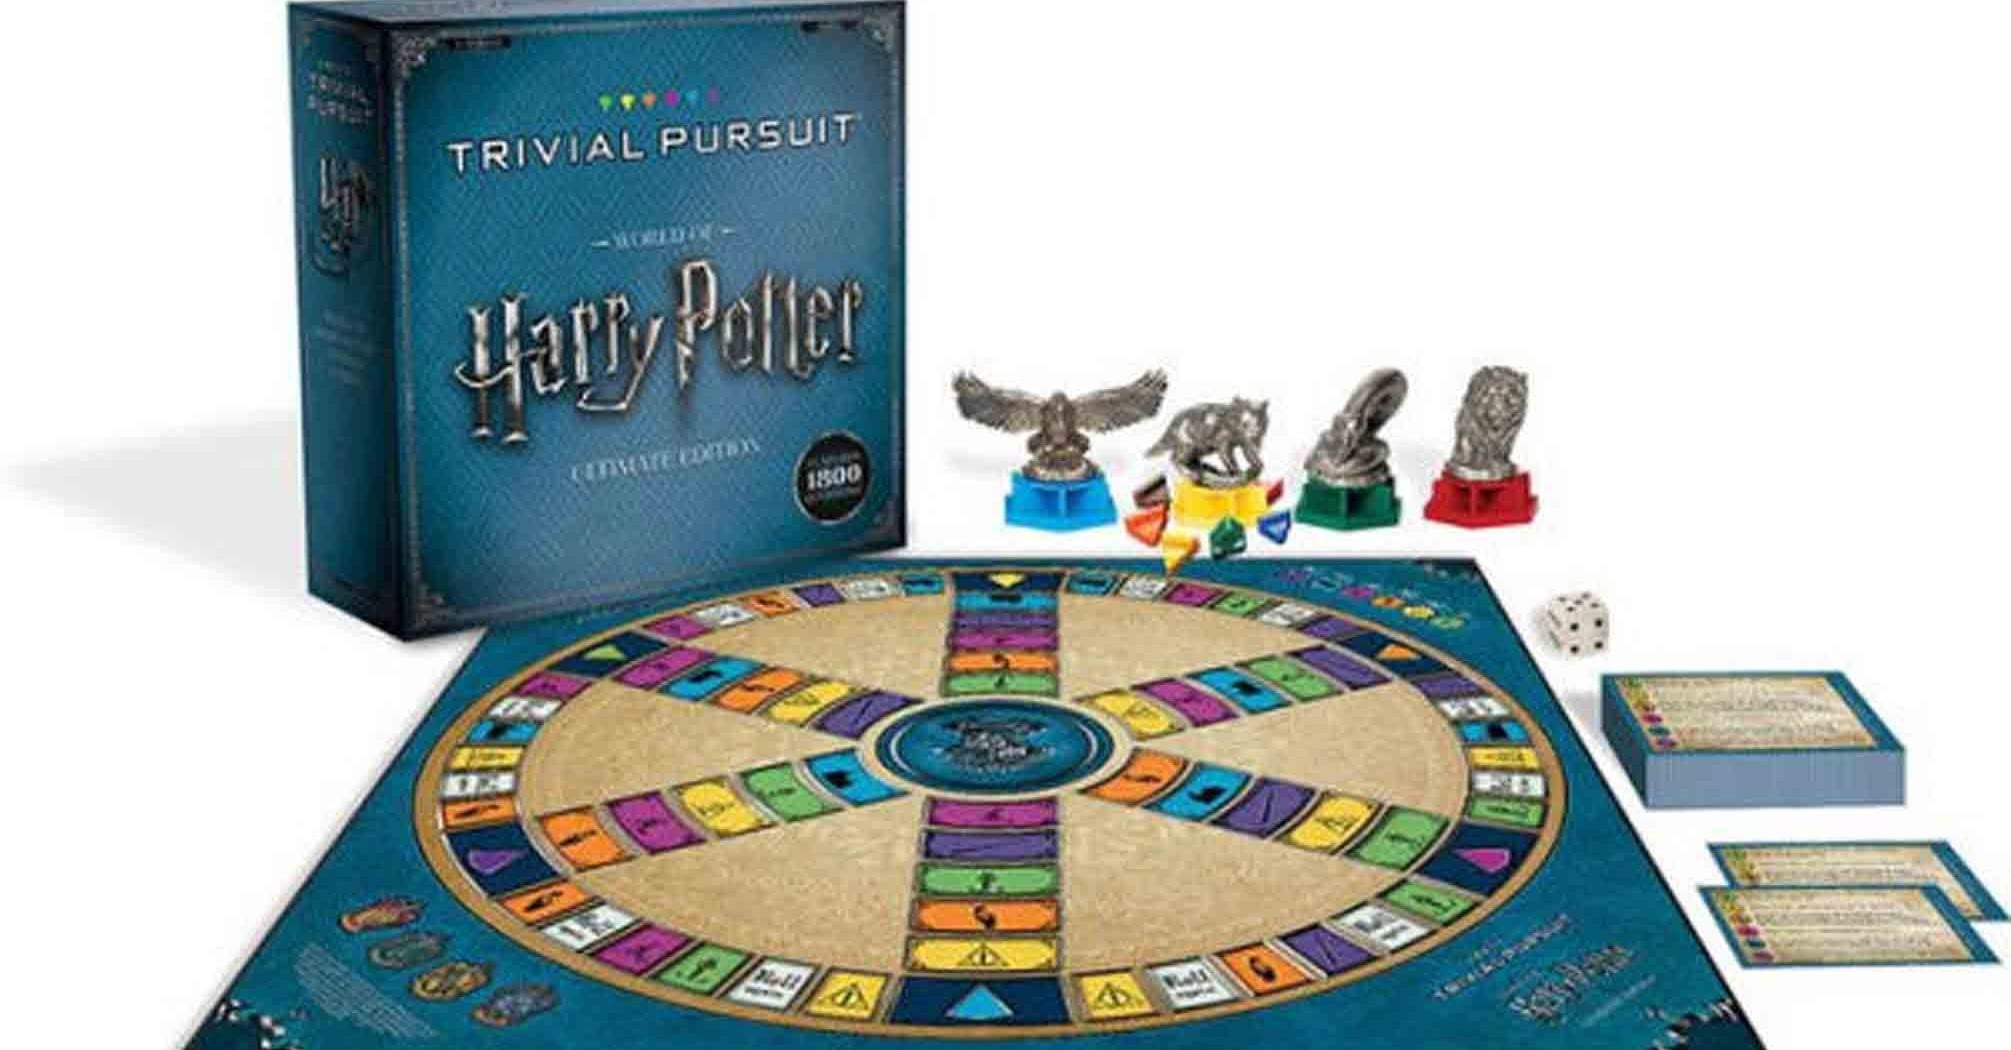 Limited Edition Harry Potter Trivial Pursuit